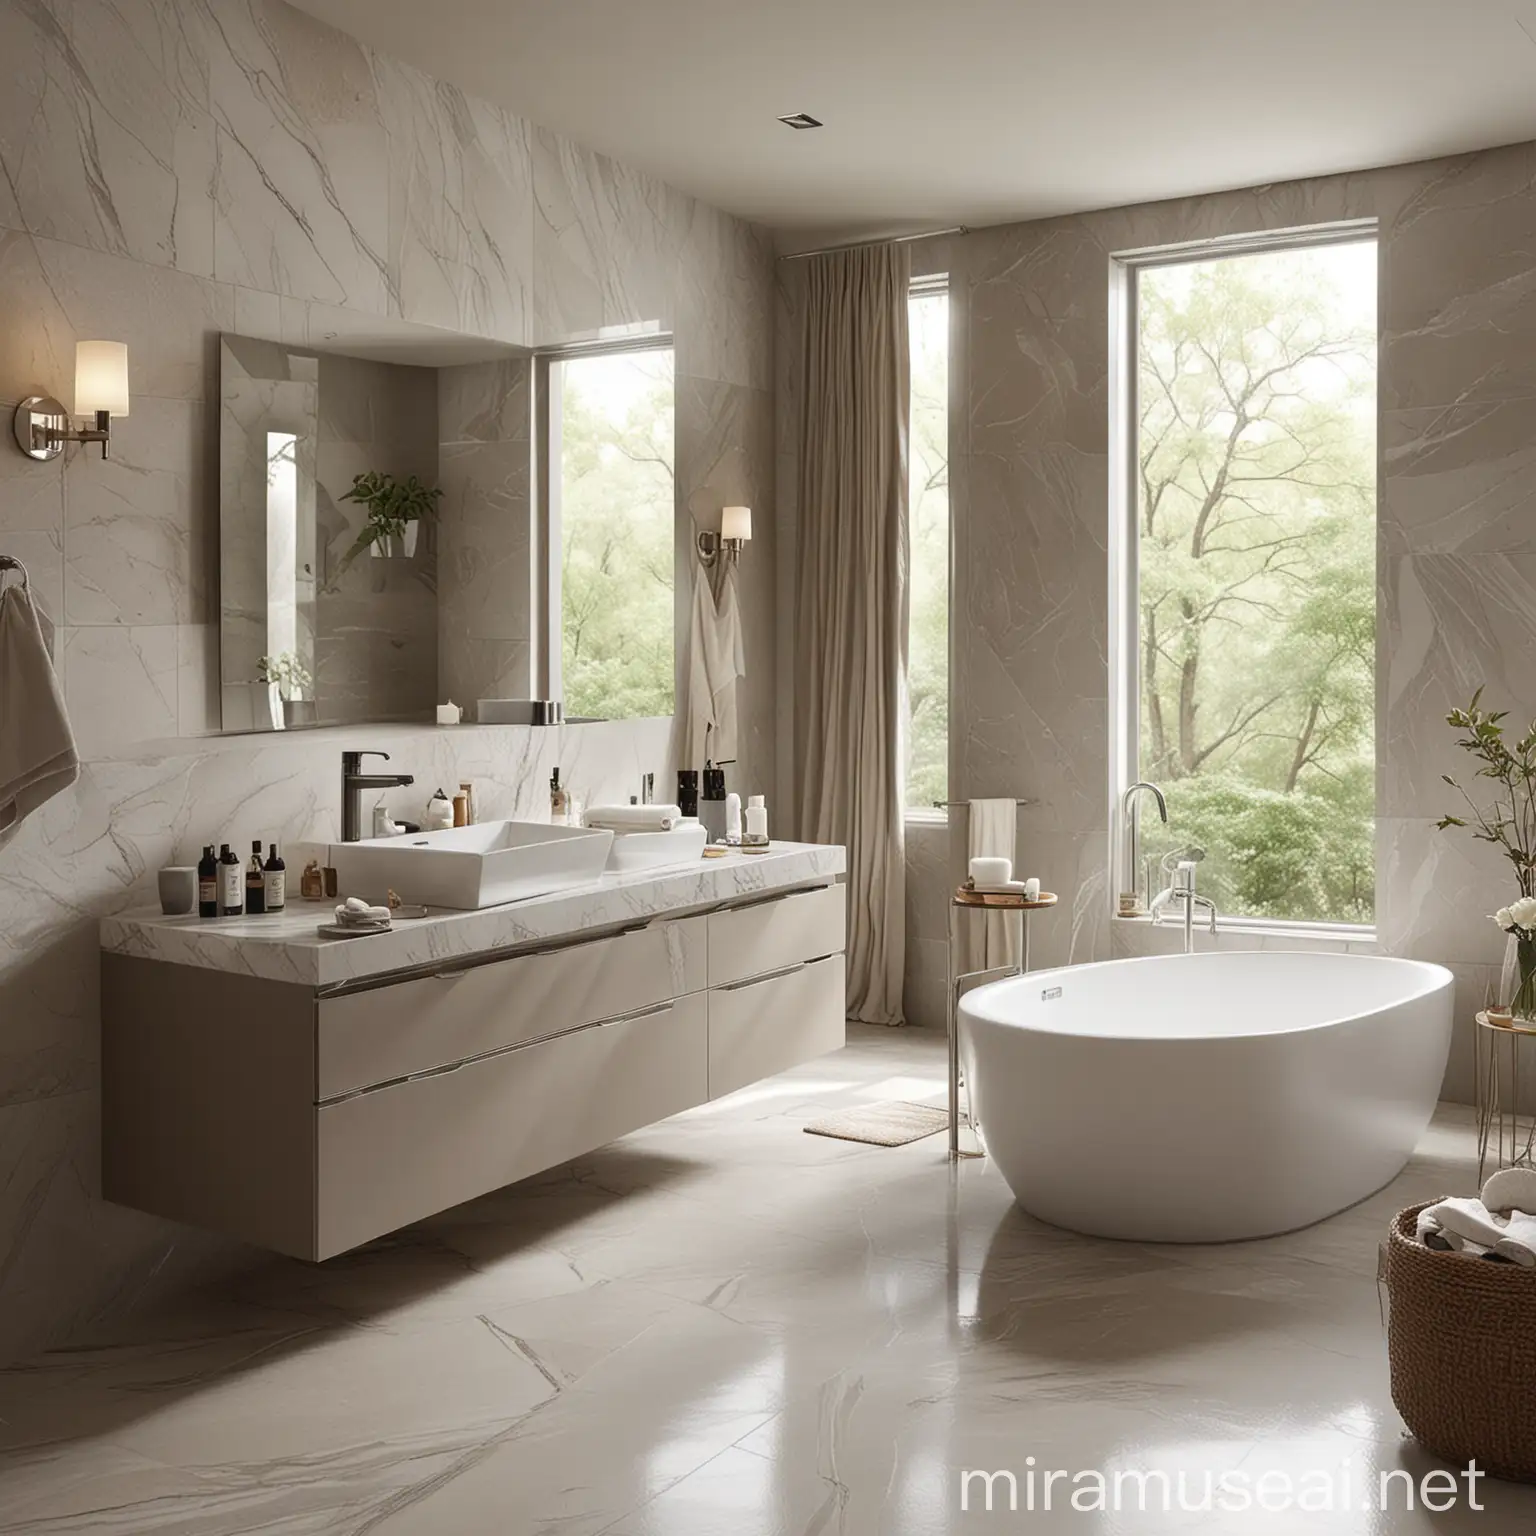 Luxurious SpaInspired Bathroom with Freestanding Marble Bathtub